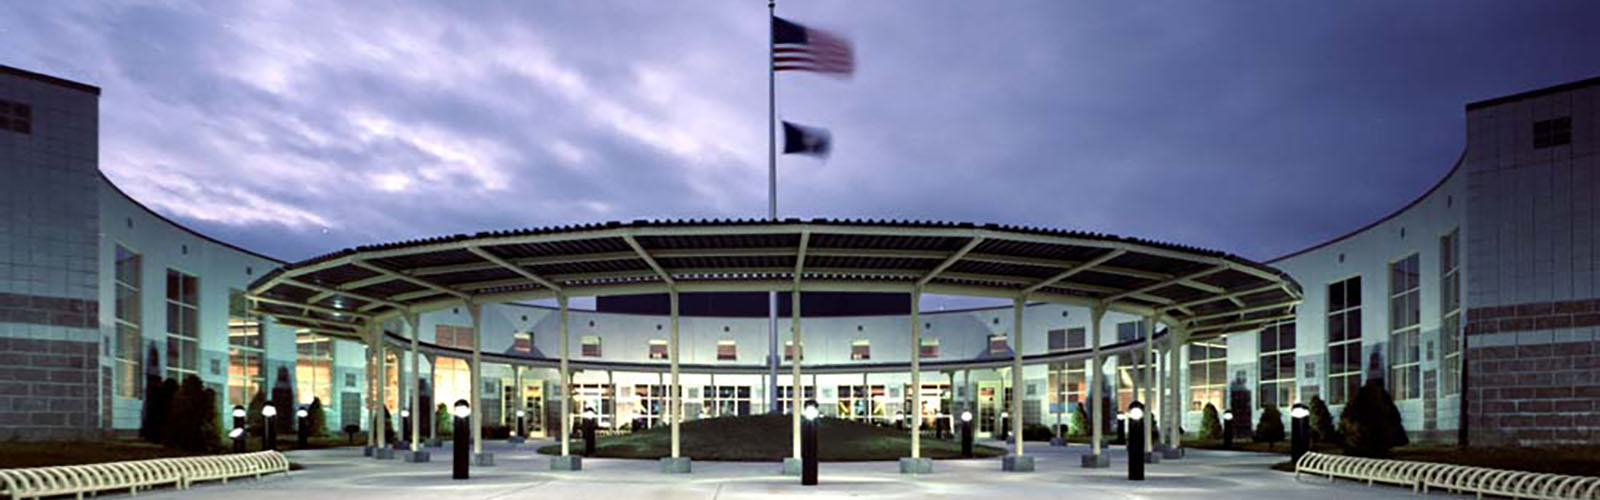 Shawnee Mission School District » HMN Architects HMN Architects